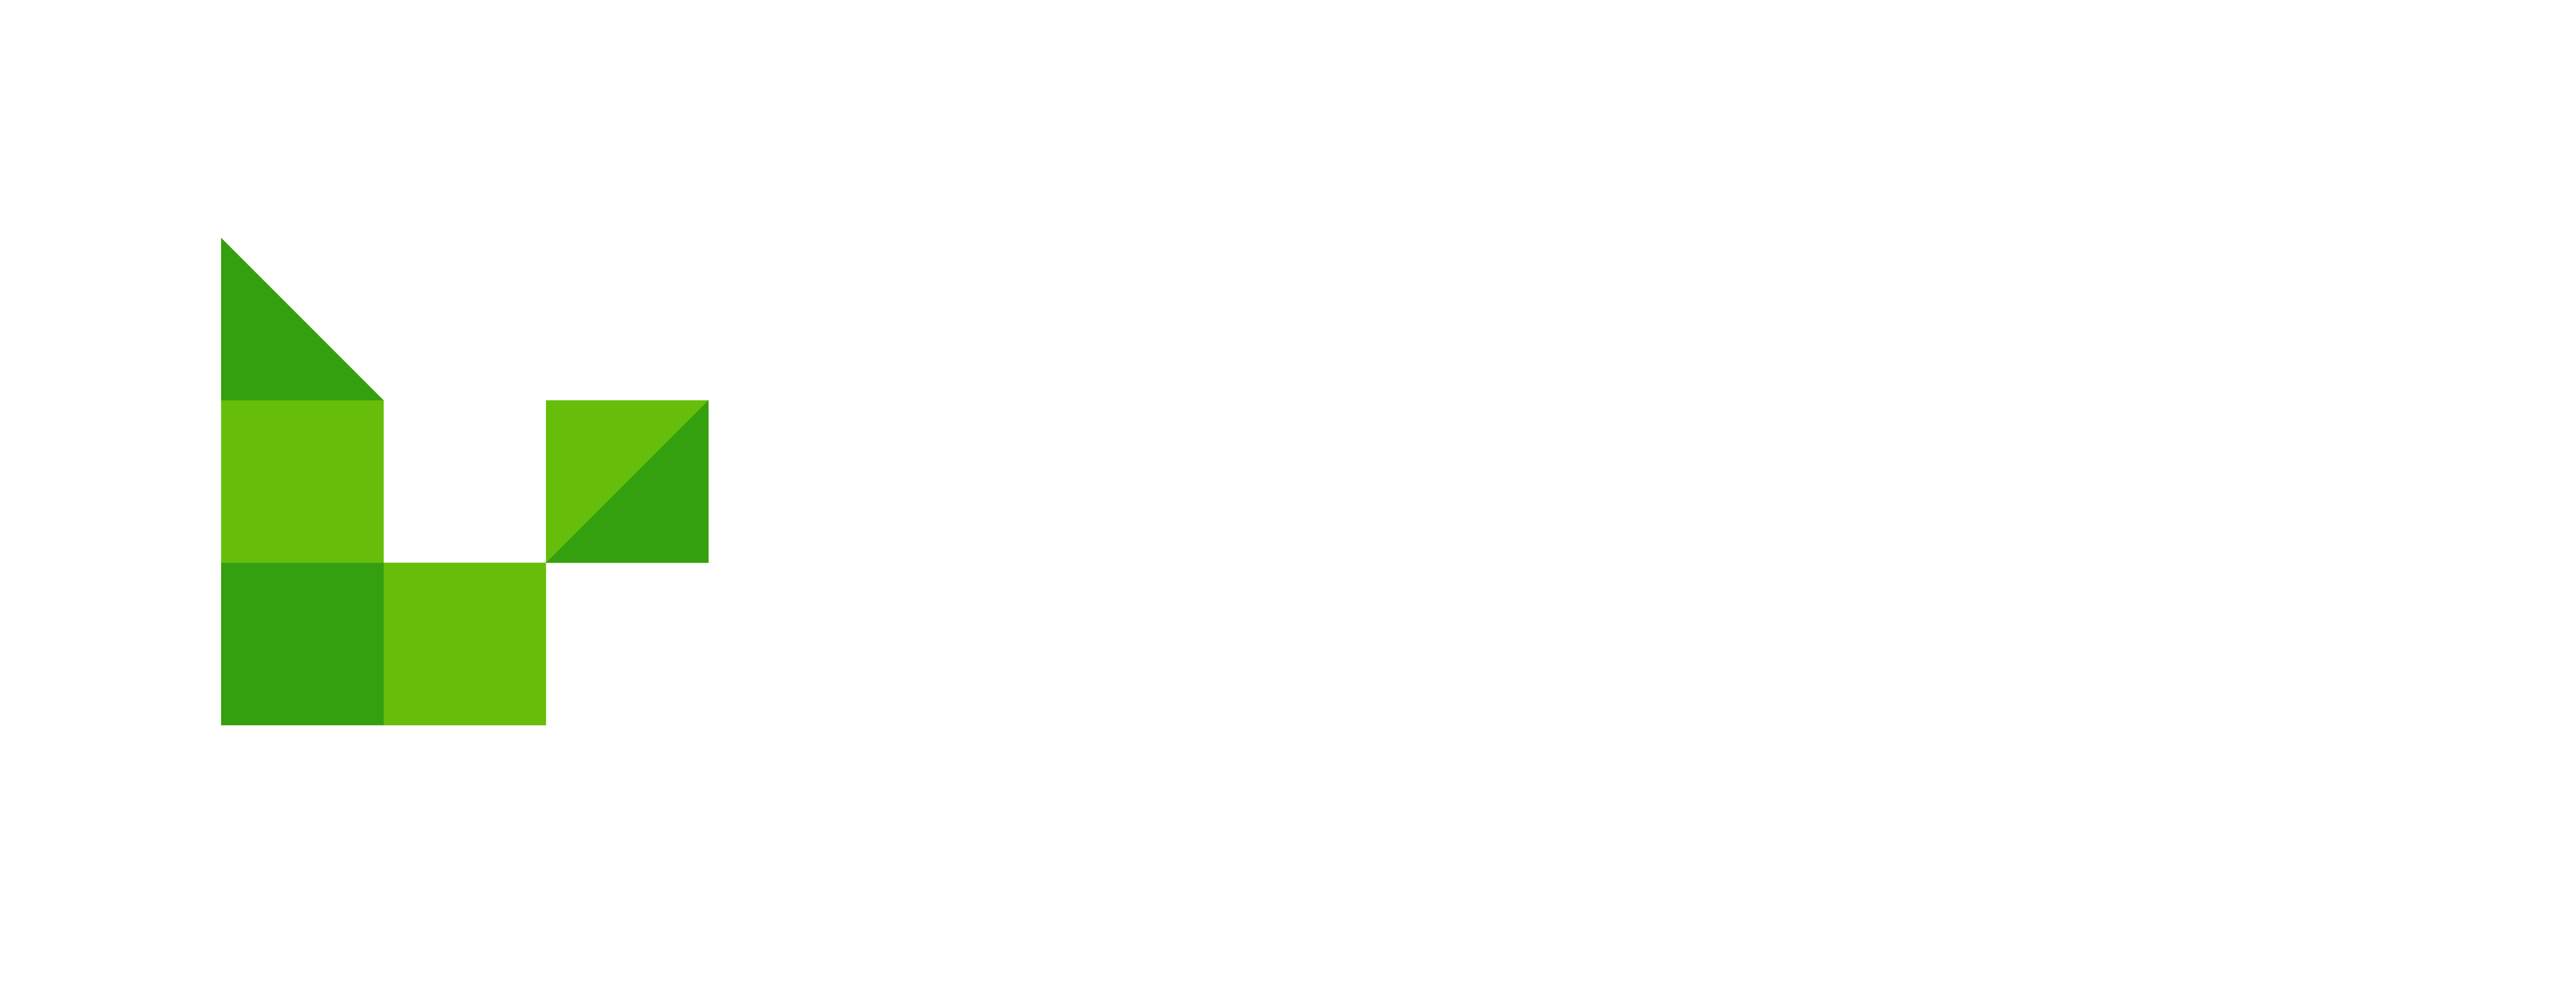 Lindsay Technical Services Ltd